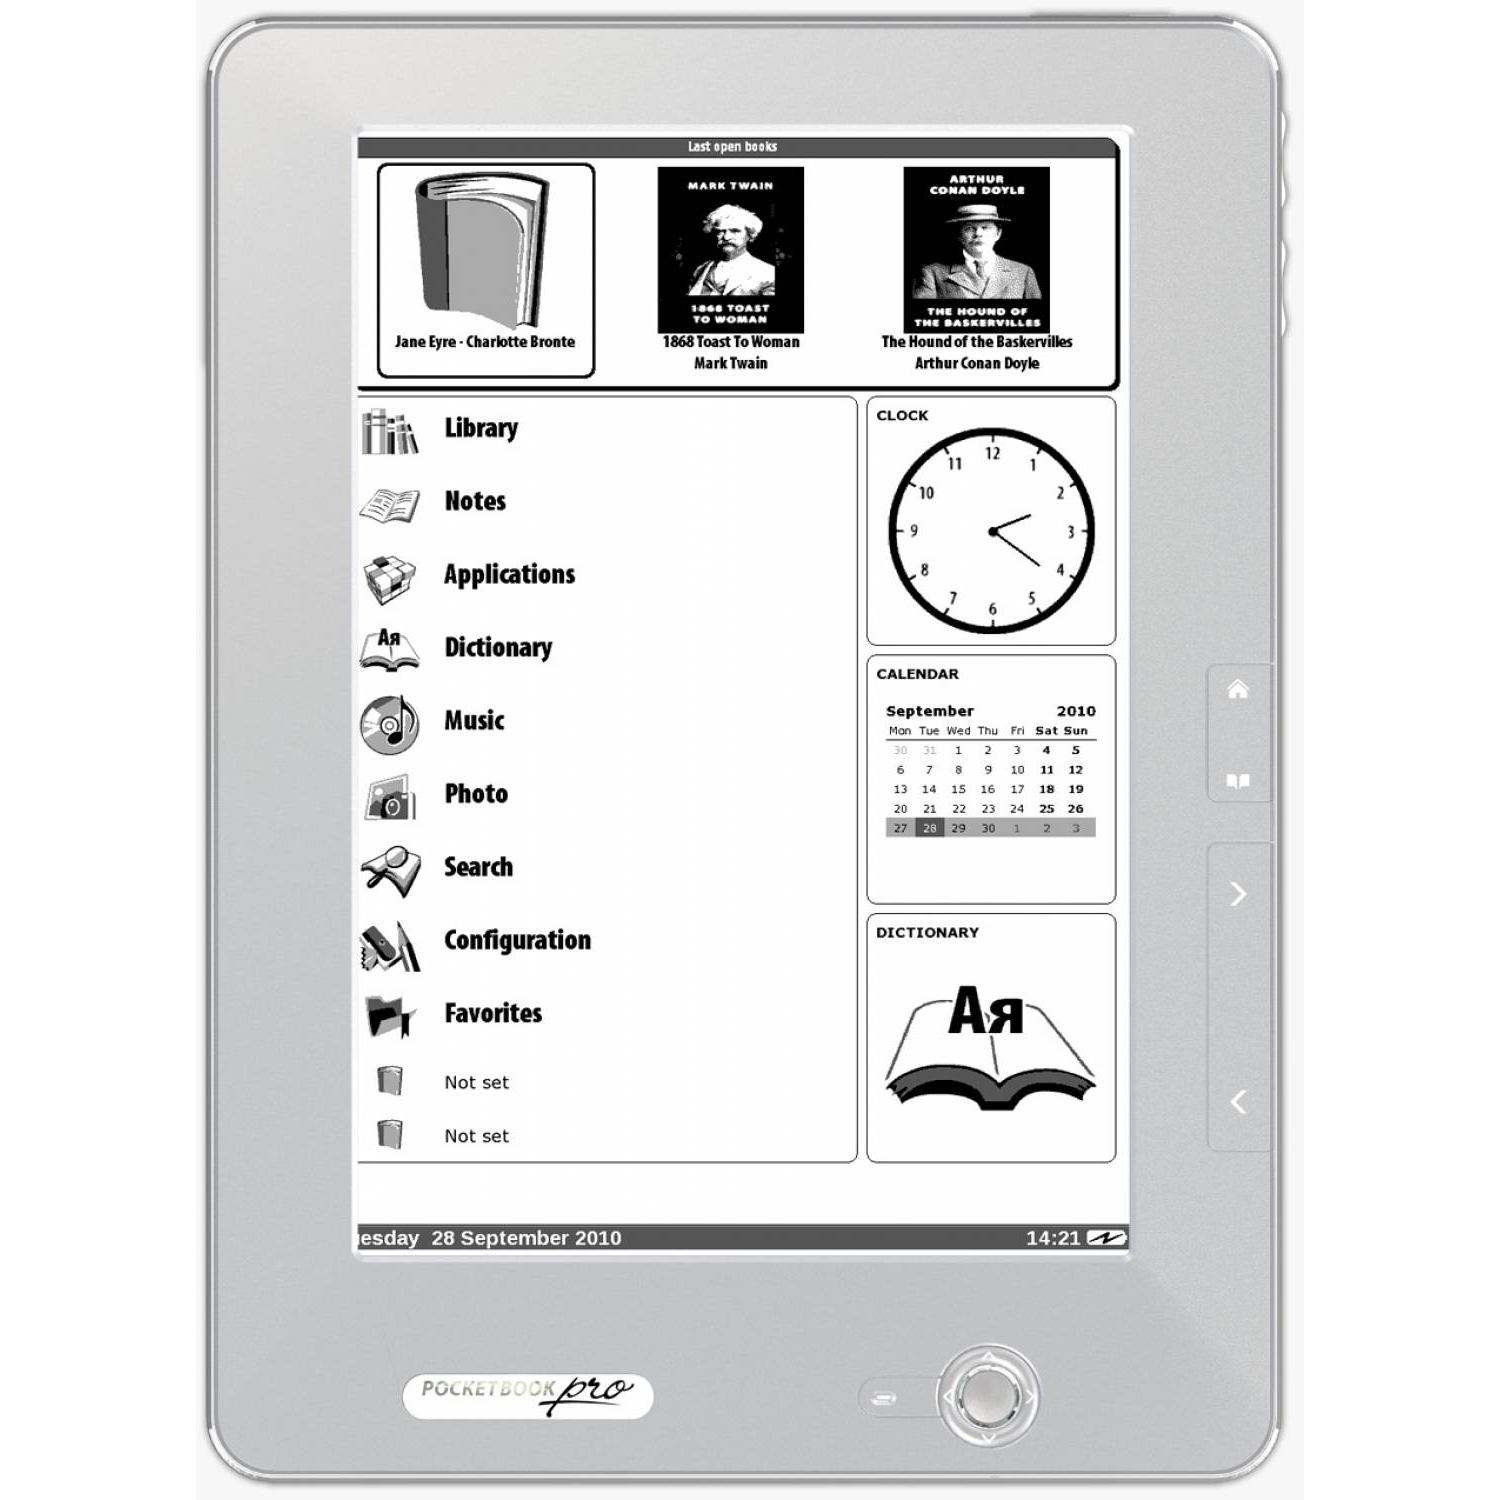 PocketBook Pro 602